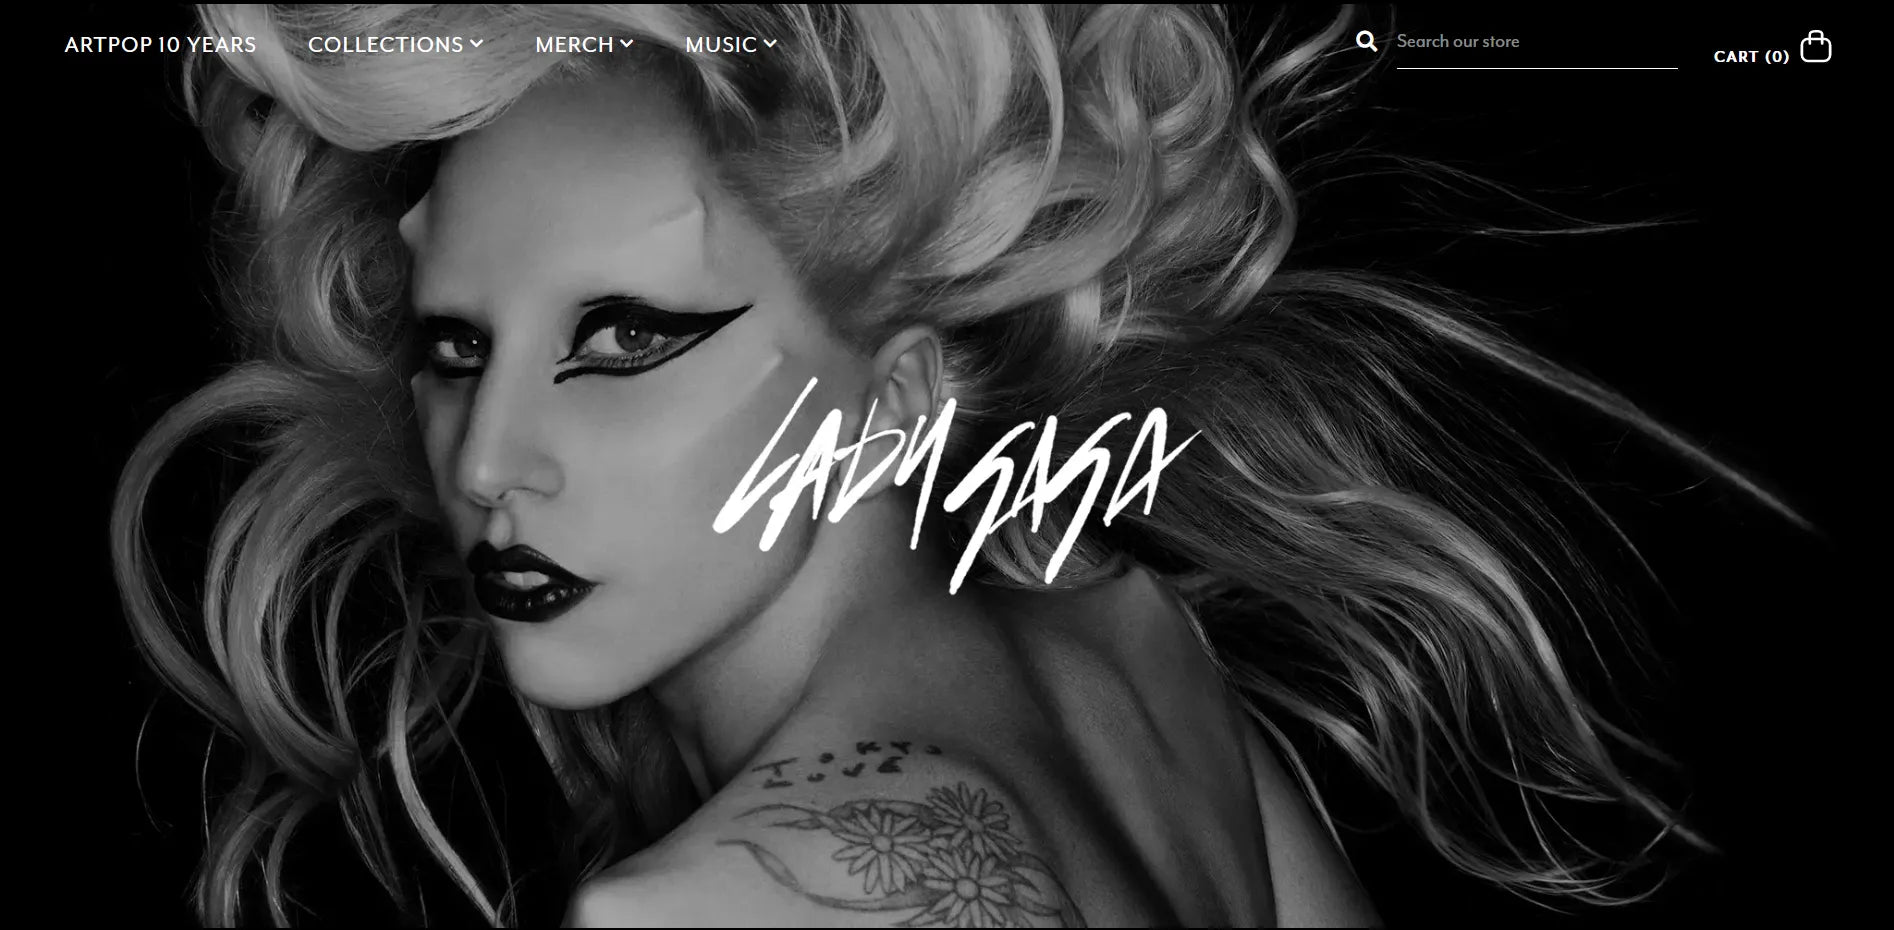 Screenshot of Lady Gaga’s Shopify music store.